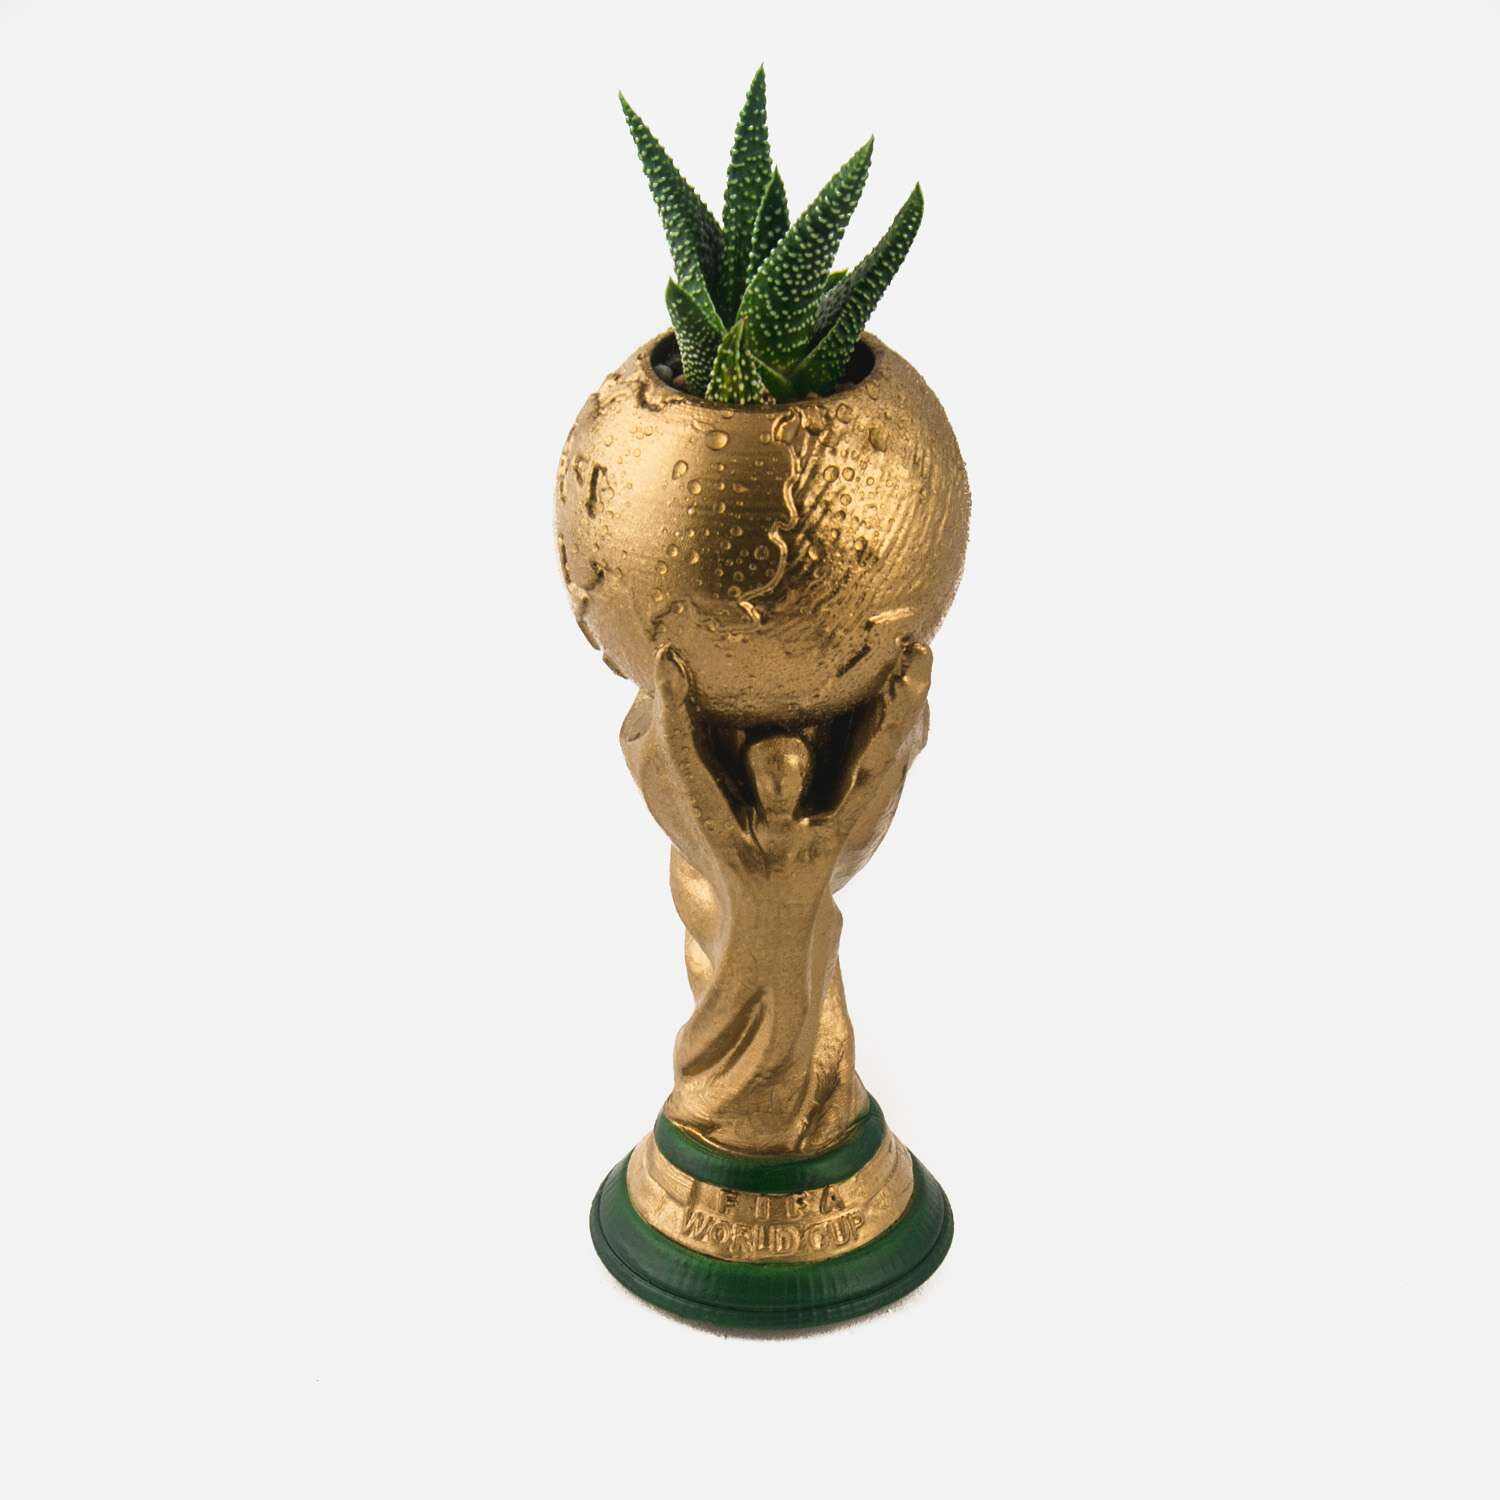 Fifa World cup planter